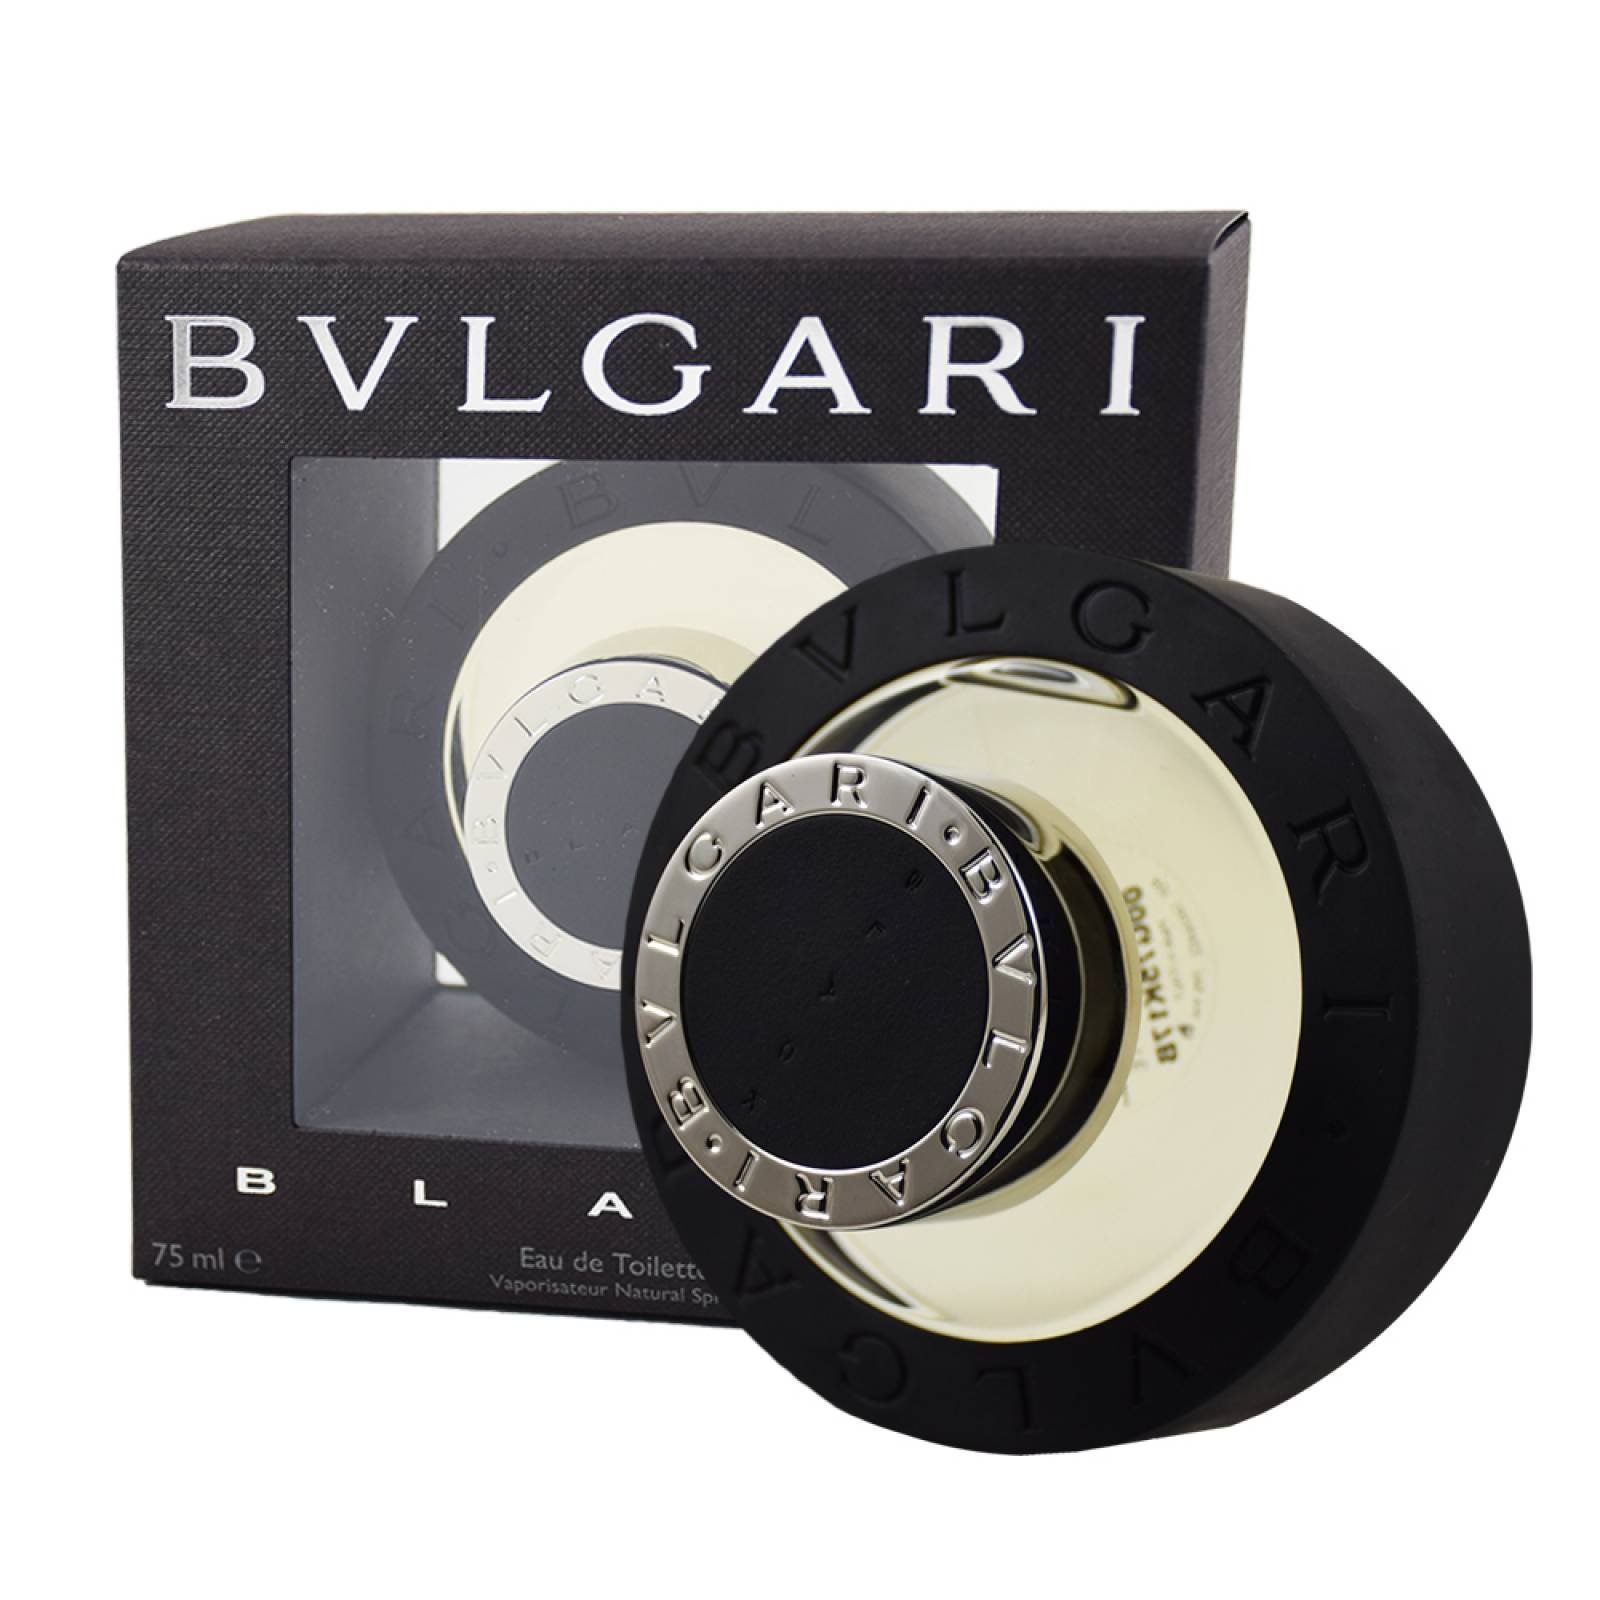 Bvlgari Black 75 ml Eau de Toilette Spray de Bvlgari Fragancia para Ca